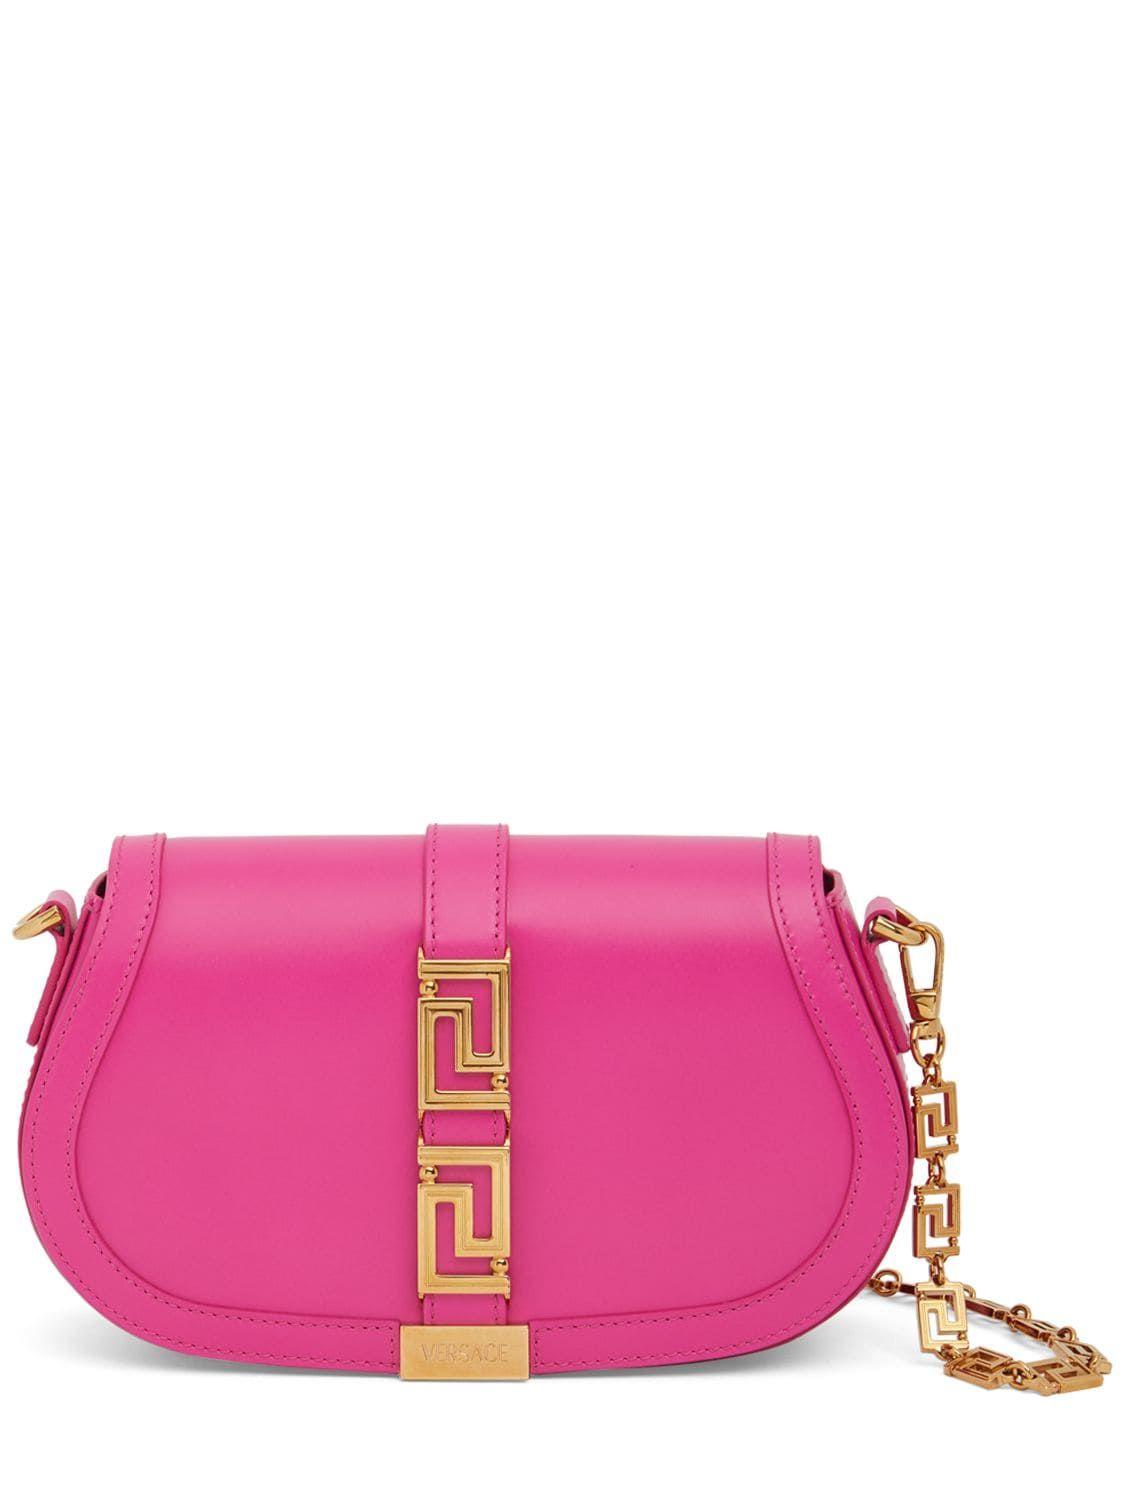 Versace Small Greca Goddess Leather Shoulder Bag in Pink | Lyst